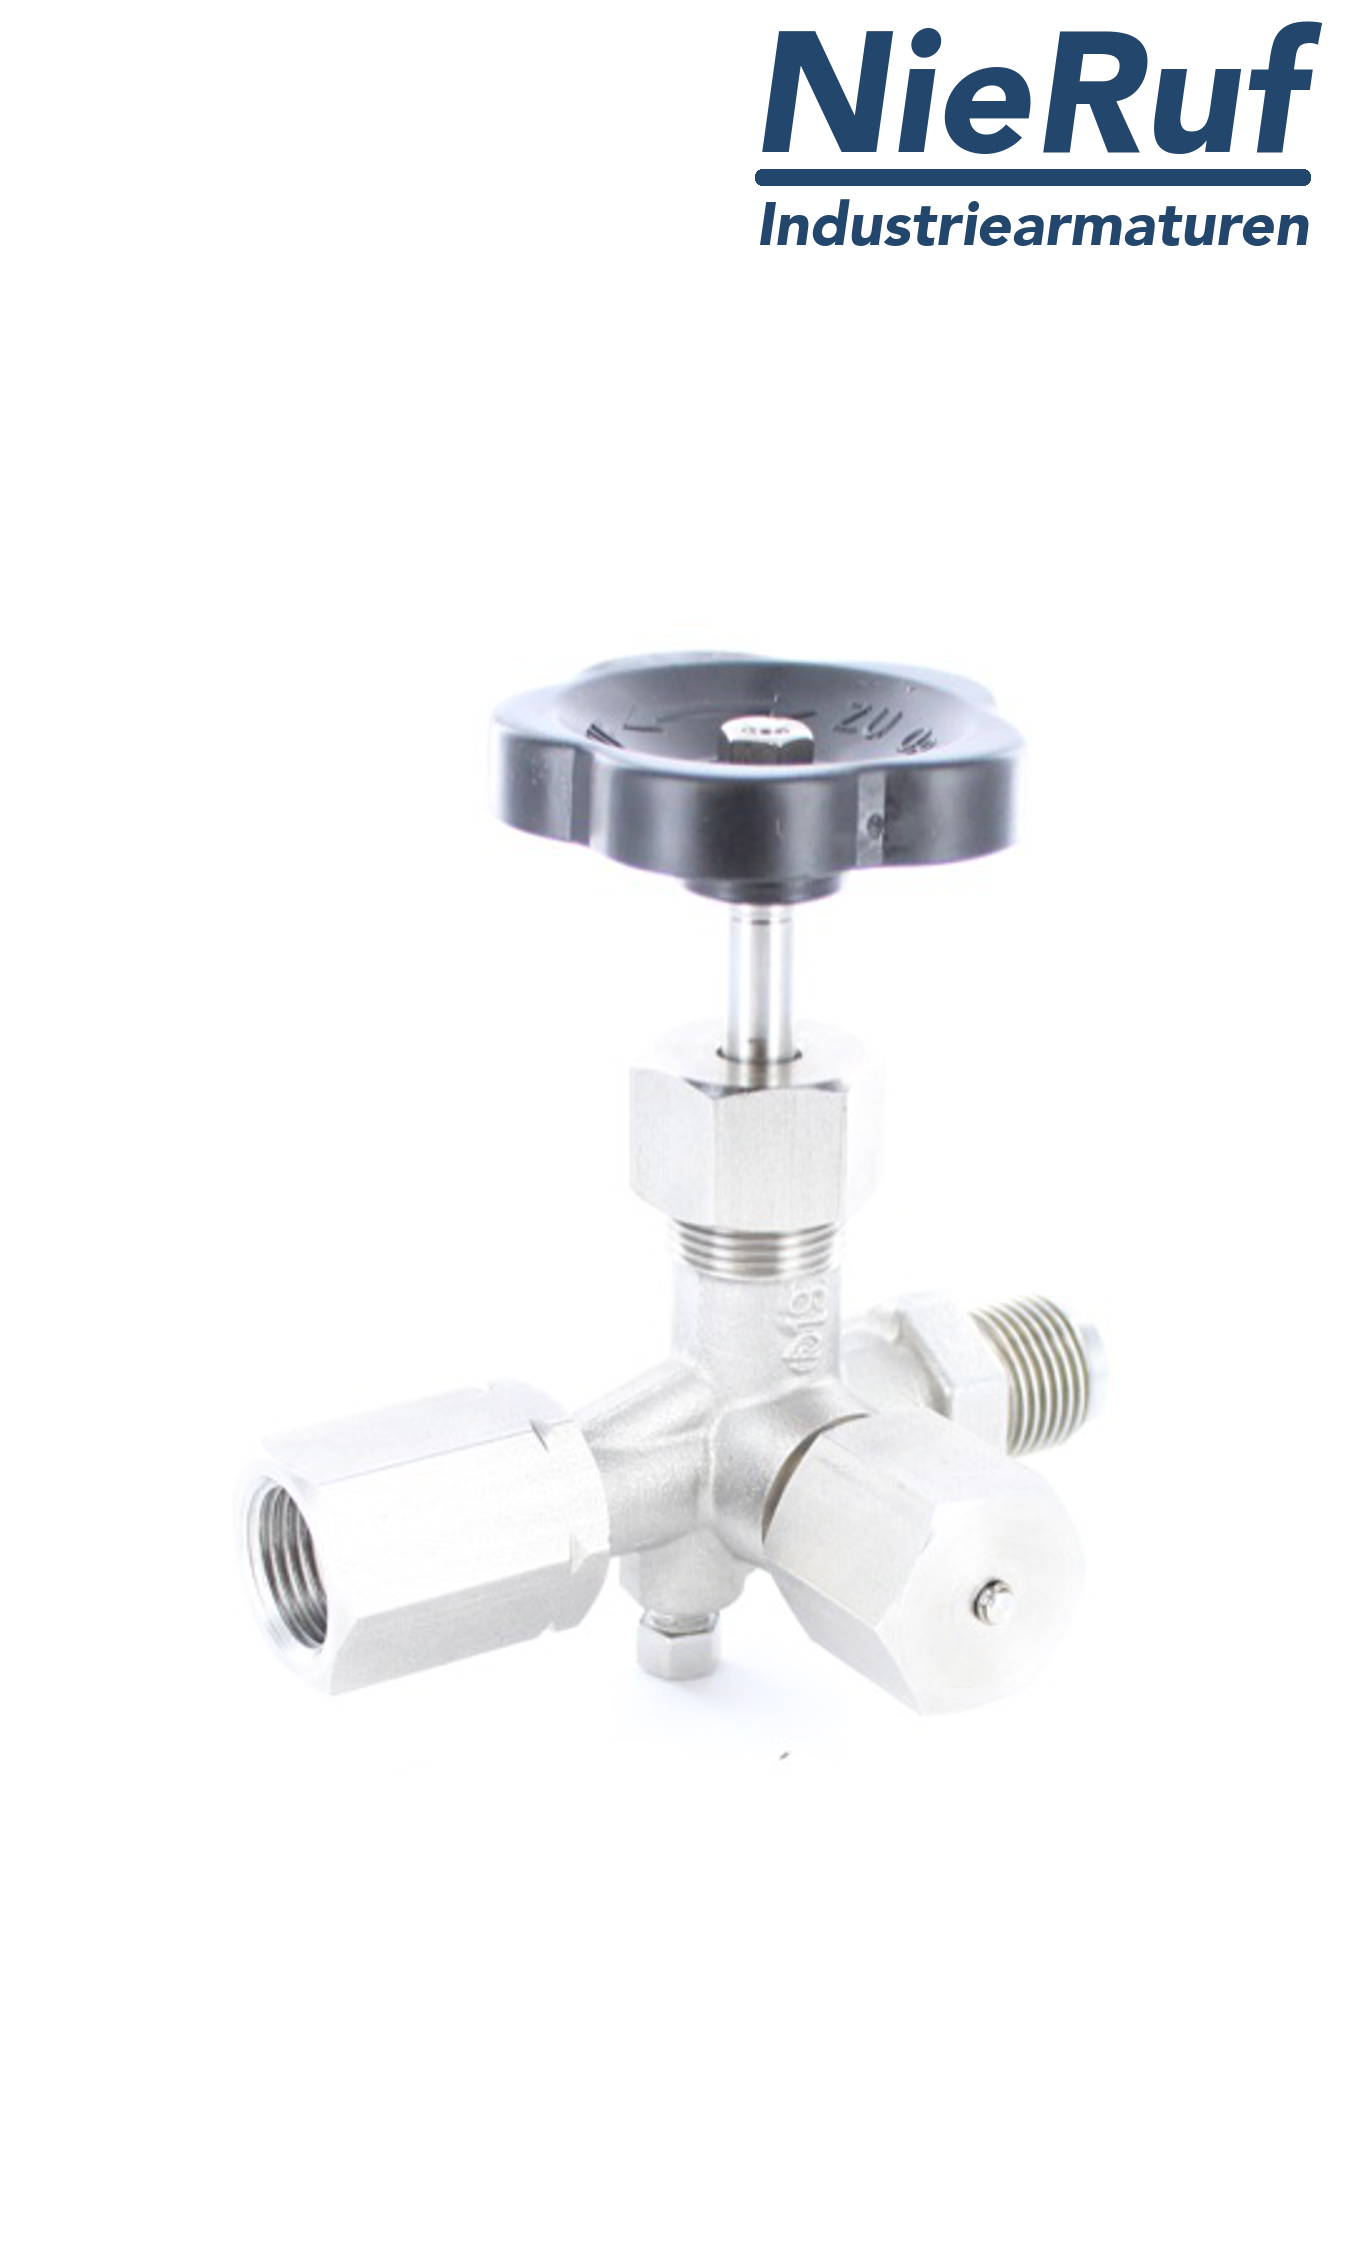 manometer gauge valves sleeve x sleeve x test connector M20x1,5 DIN 16271 stainless steel 1.4571 400 bar